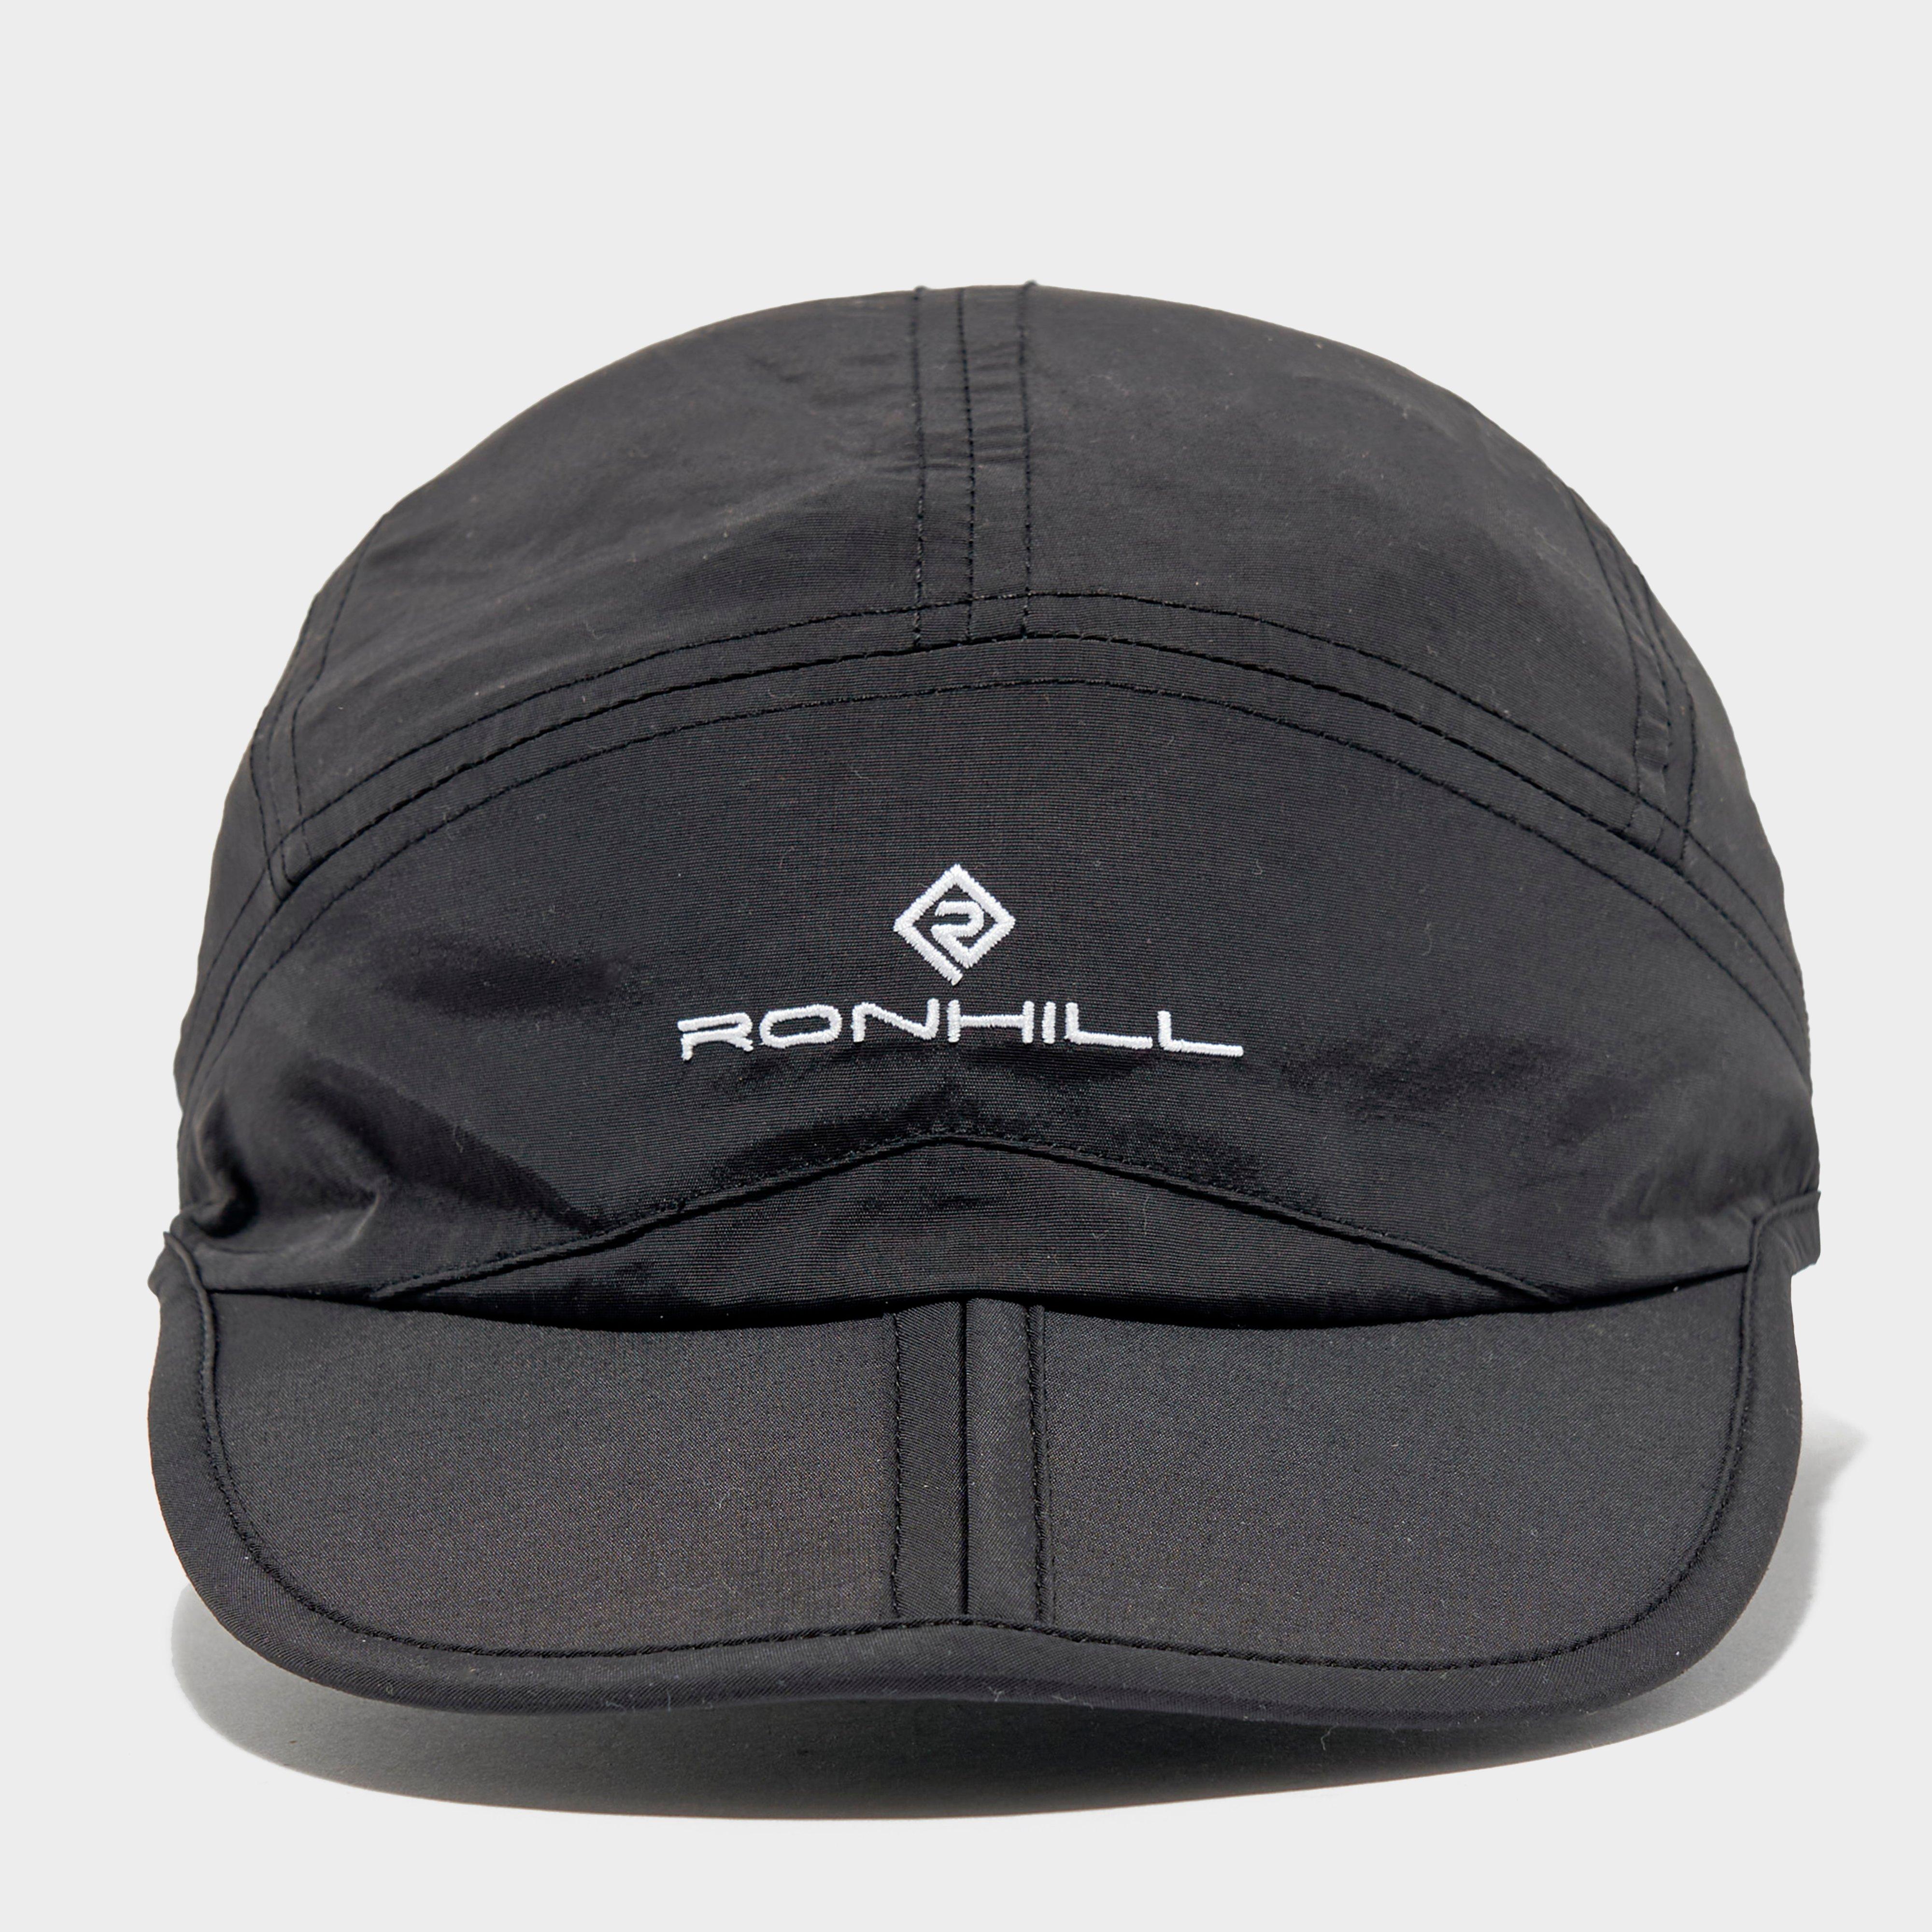 Ronhill Sun Split Cap - Black/blk  Black/blk